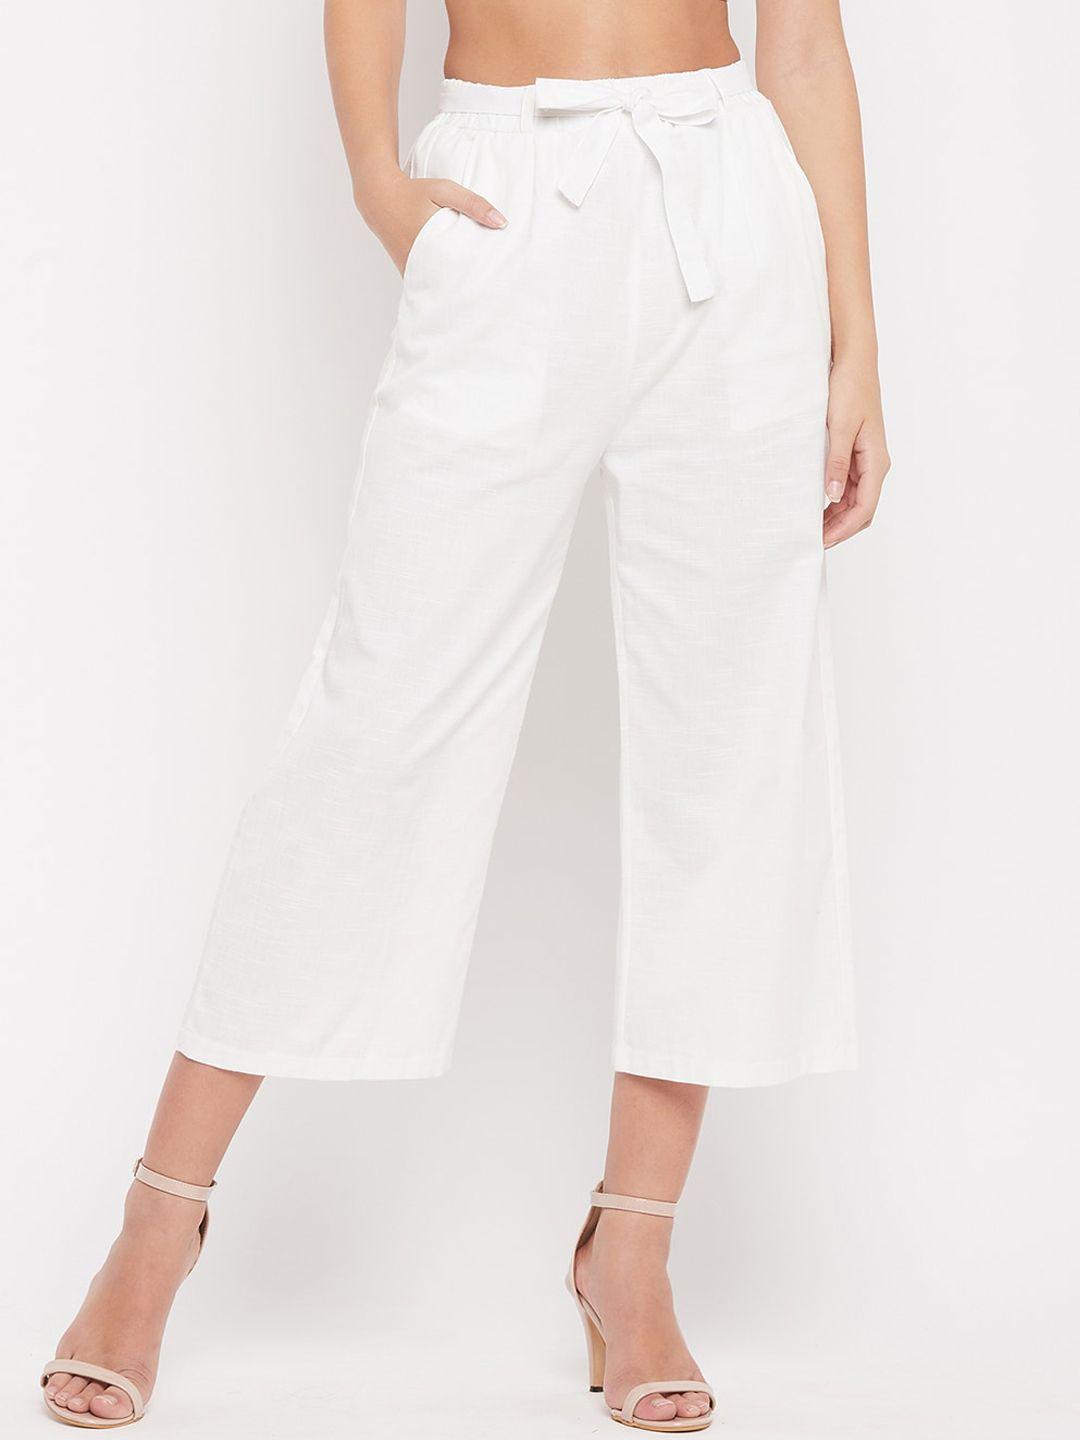 duke-women-white-high-rise-culottes-trousers